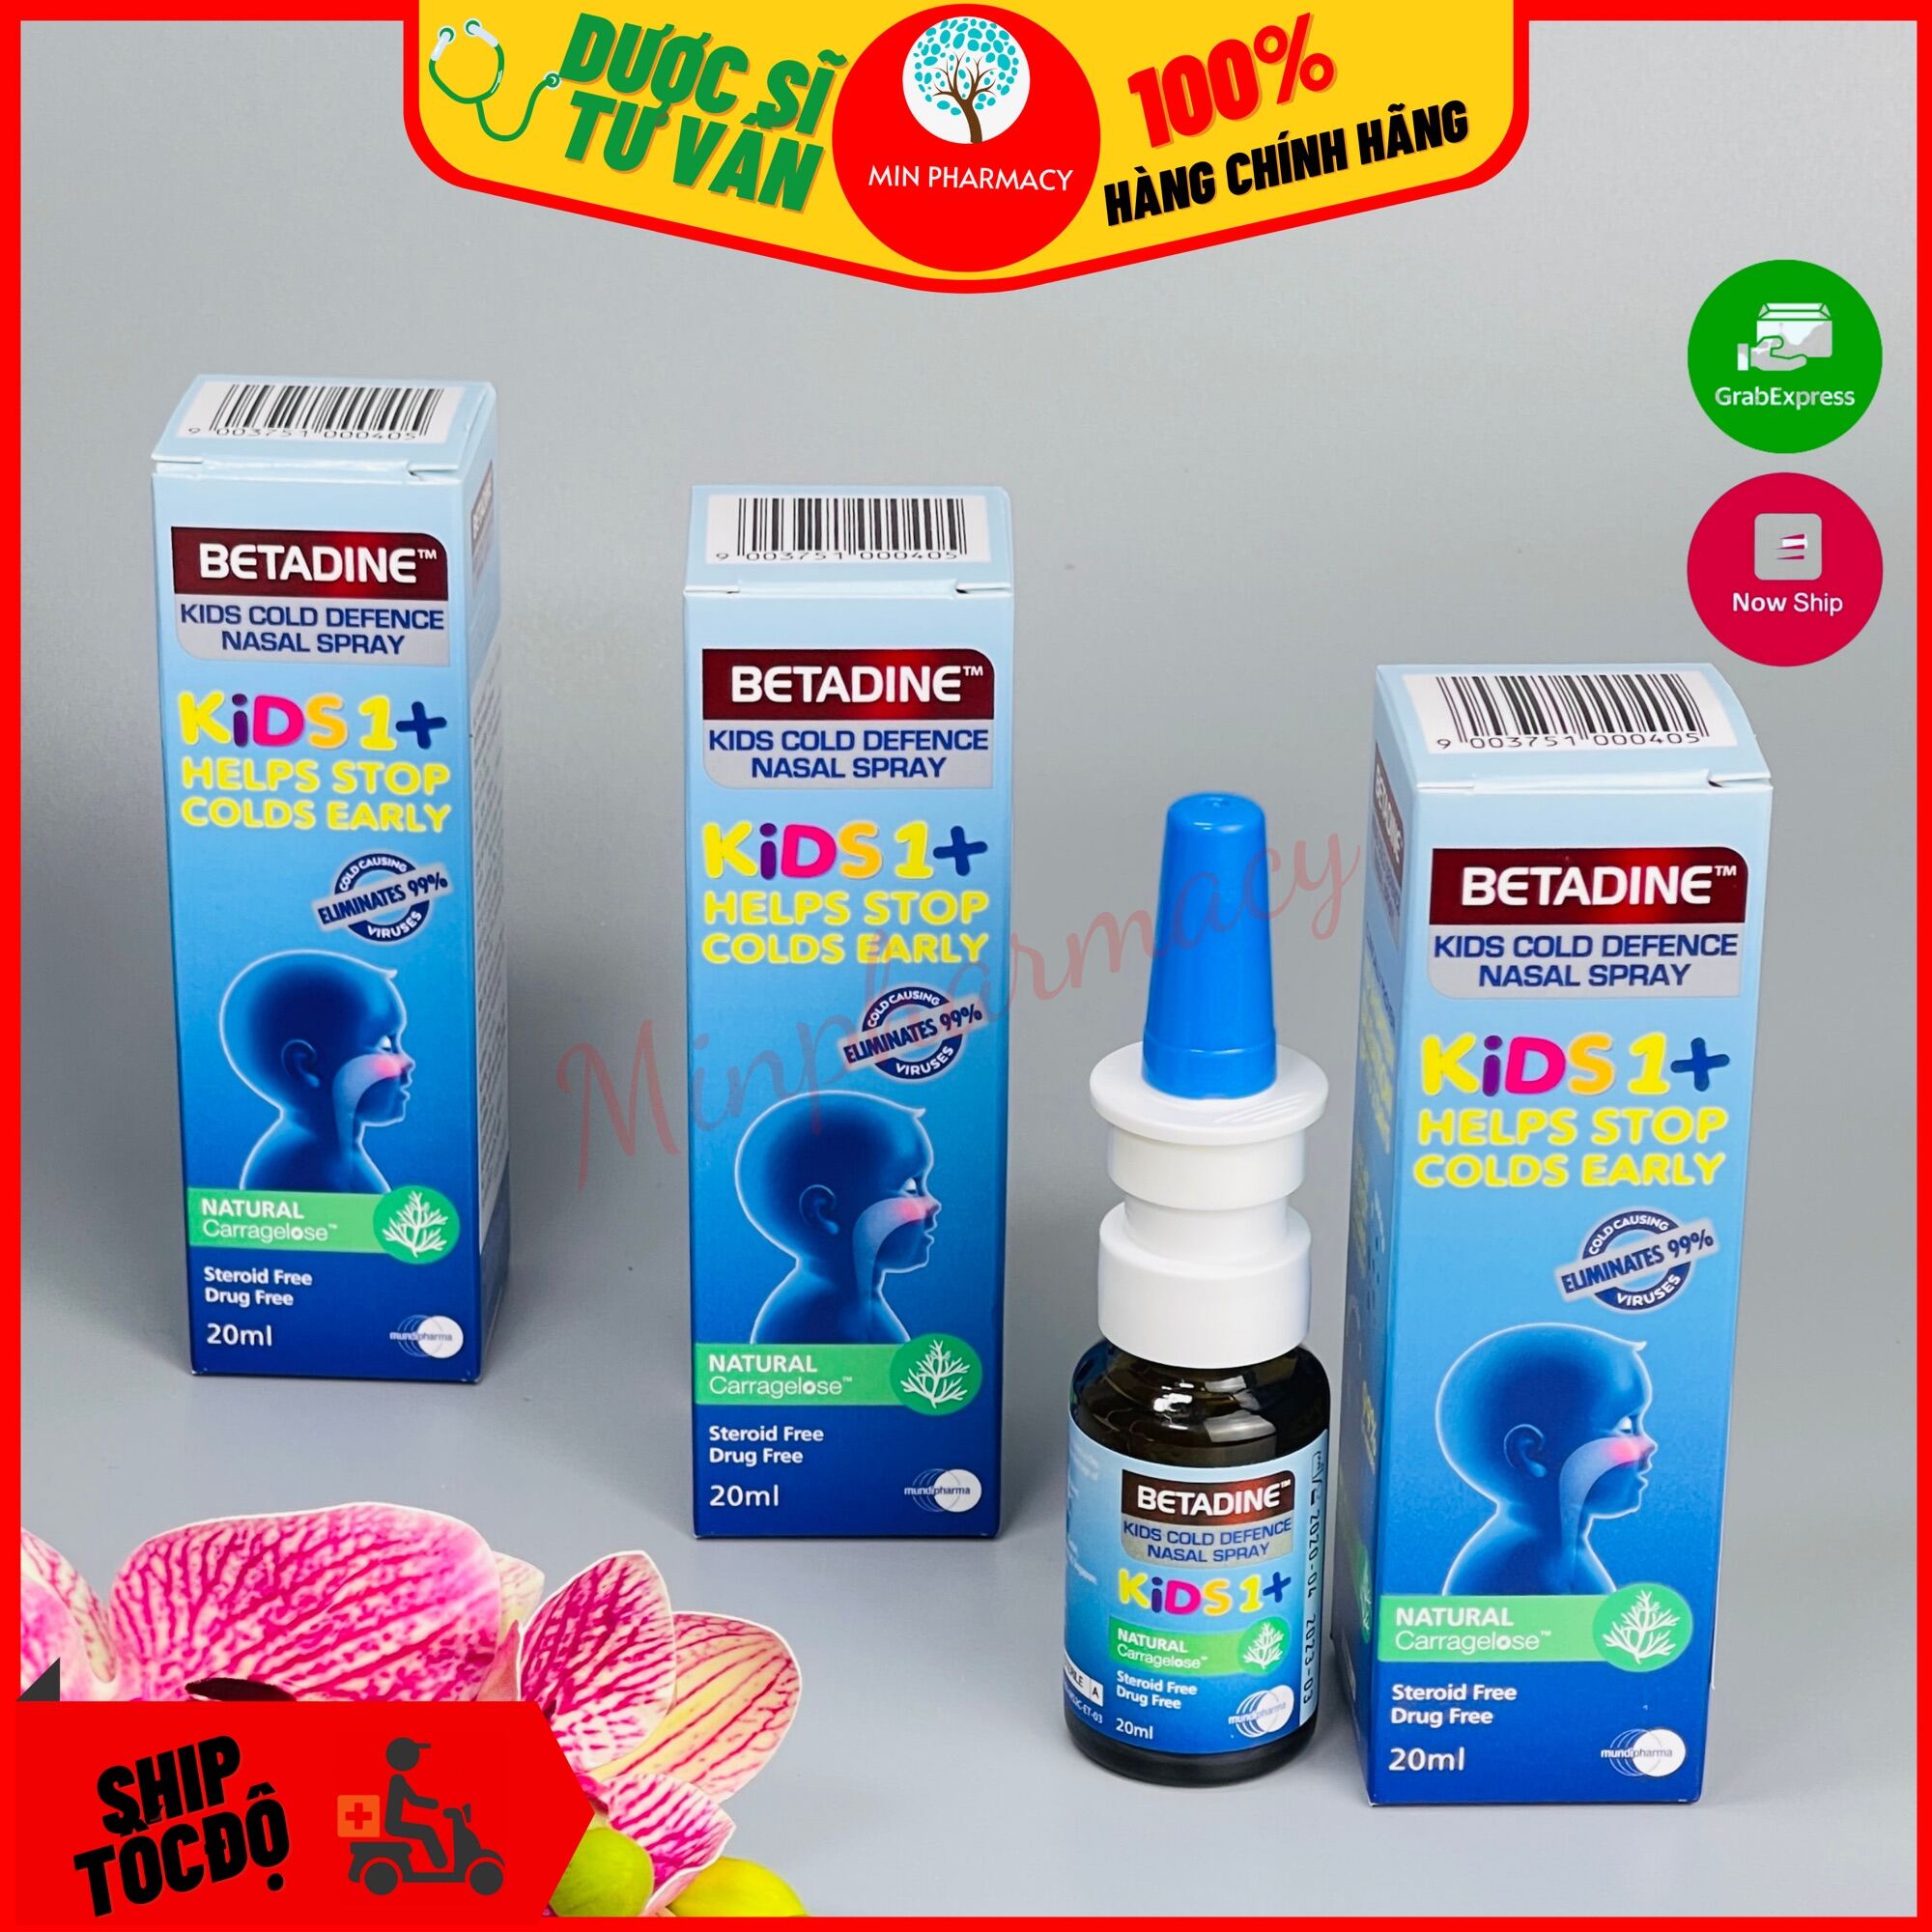 Xịt mũi Betadine Kids Cold Defence Nasal Spray chai 20ml - Minpharmacy